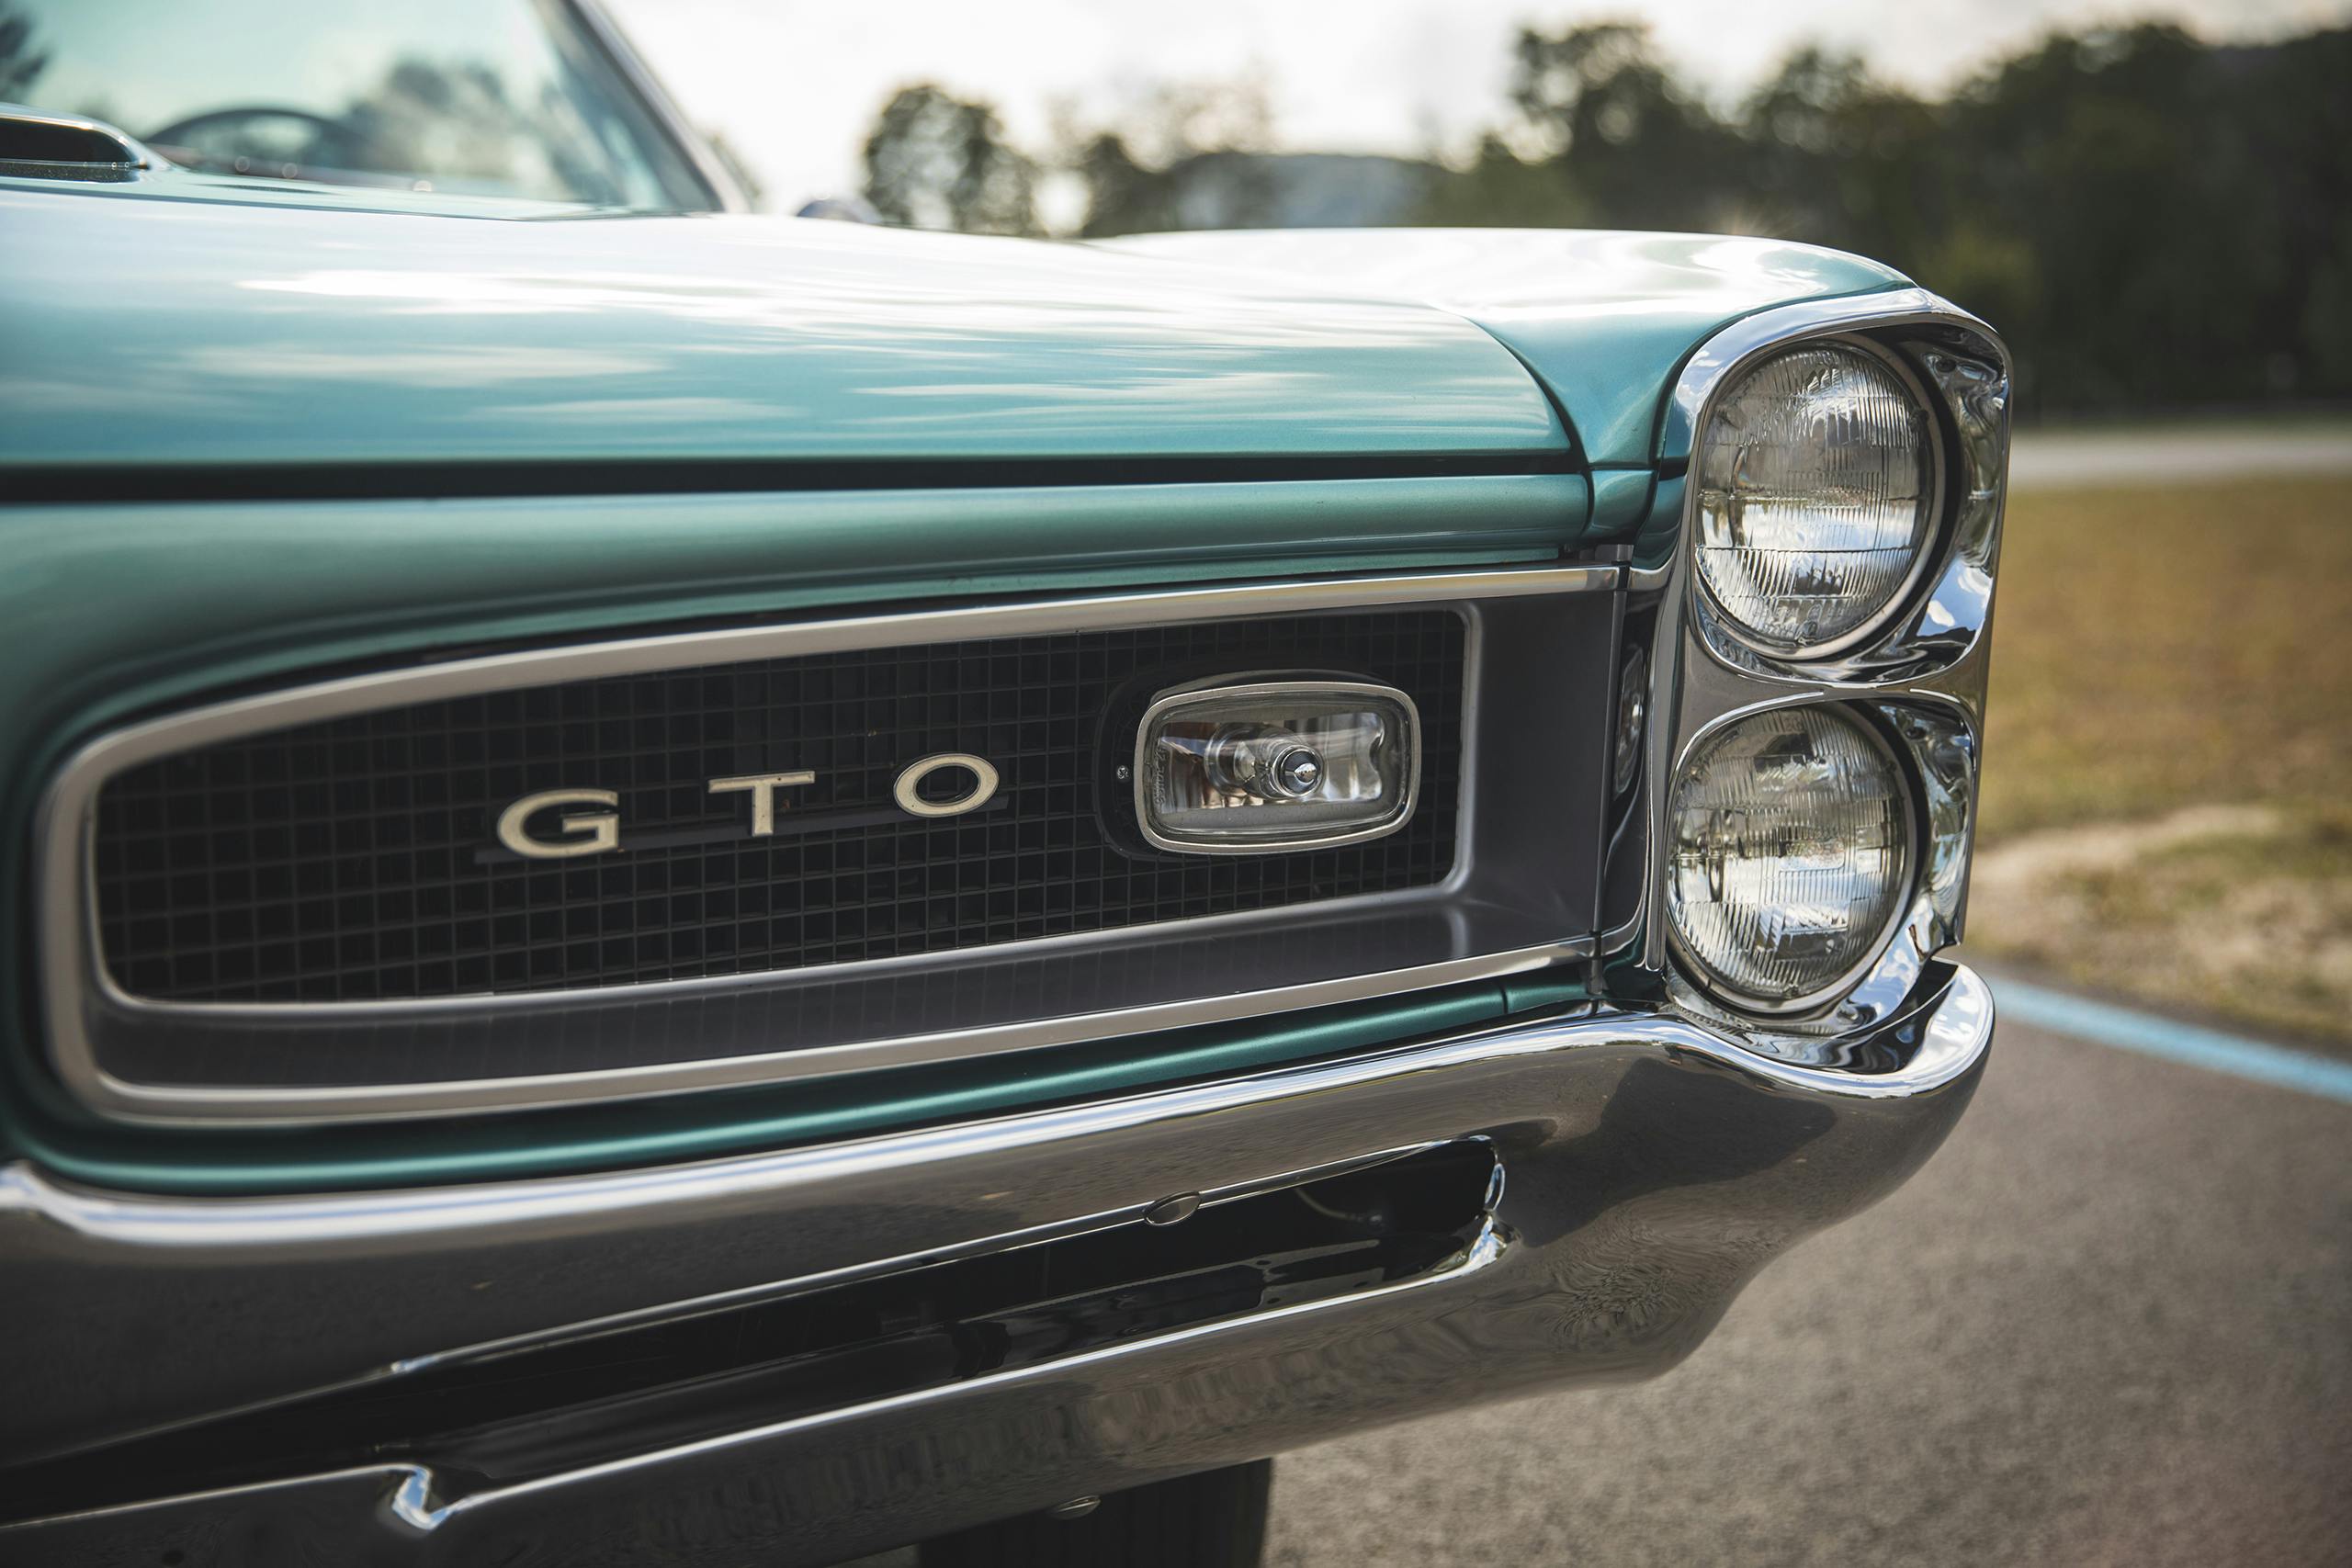 1966 Pontiac GTO grille badge headlight detail